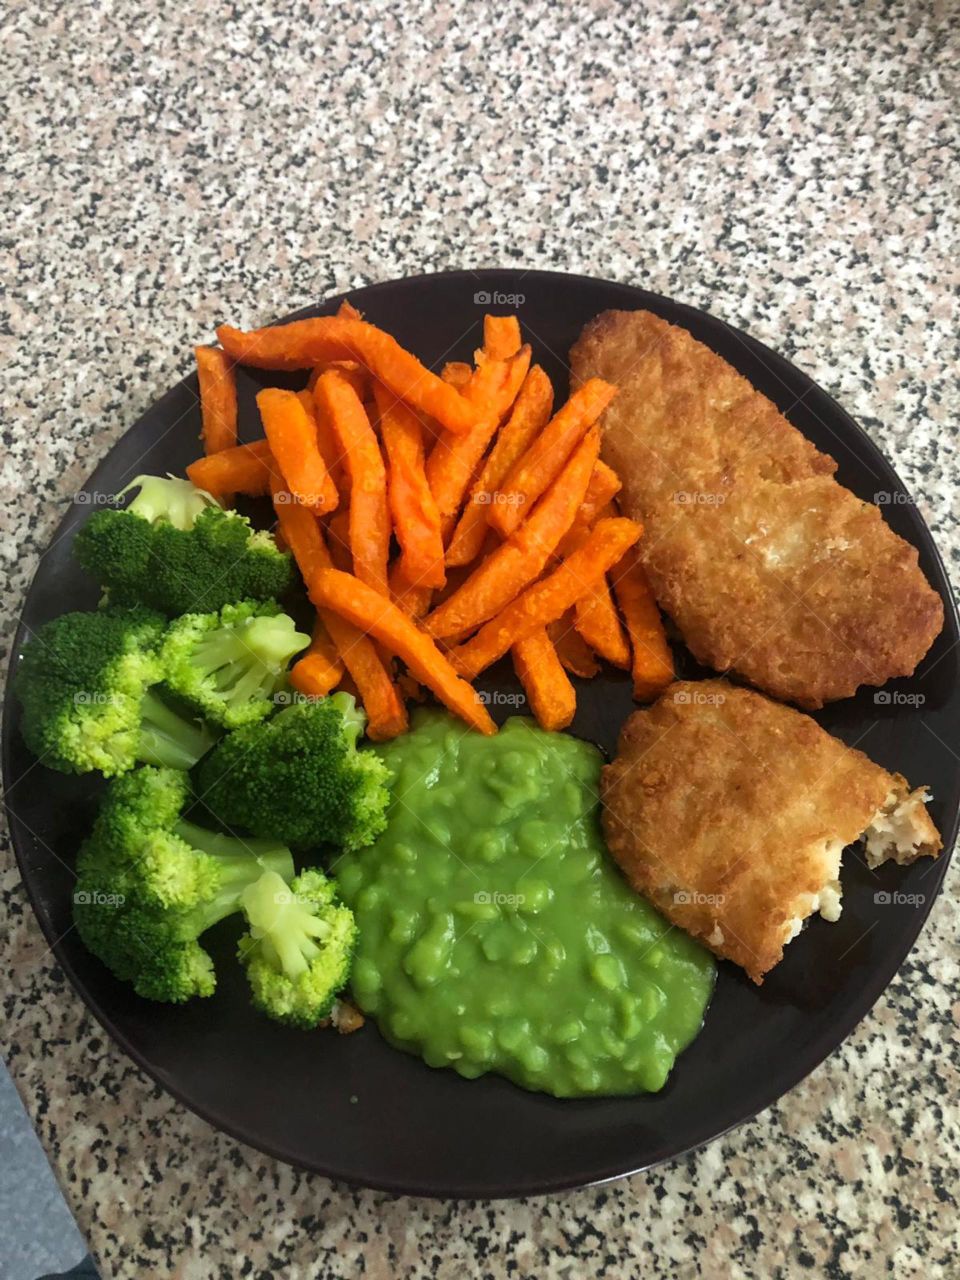 Fish’ sweet potatoes ‘ broccoli and peas 😋